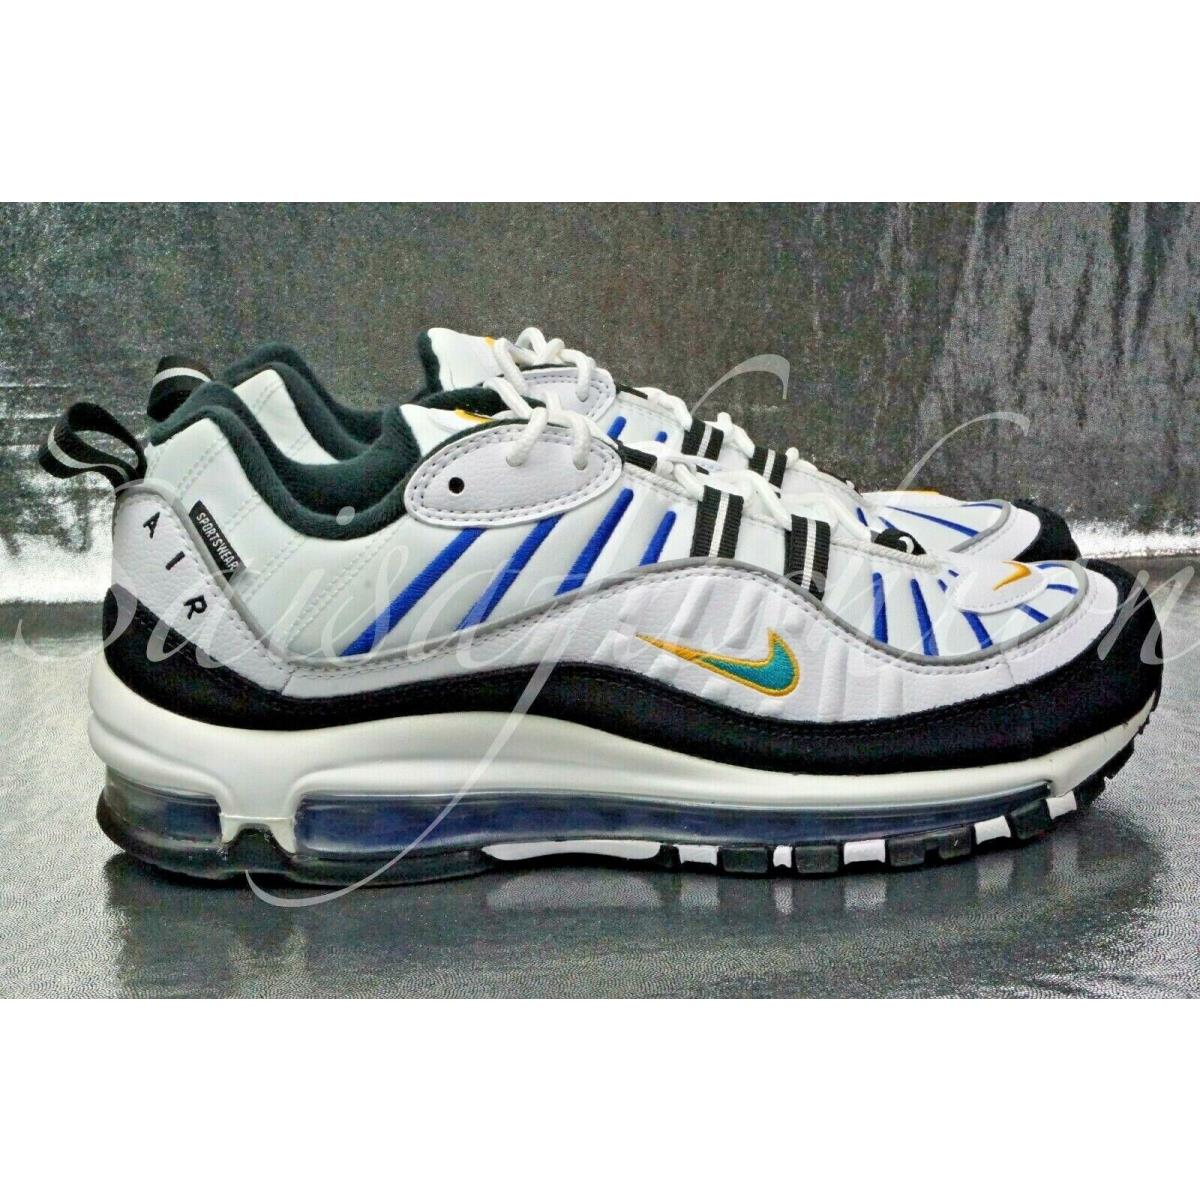 Bergantín Ficticio Explícito Nike Air Max 98 Premium `teal Nebula` CI1901-102 Women`s Size 8.5 |  193145556577 - Nike shoes Air Max - White | SporTipTop